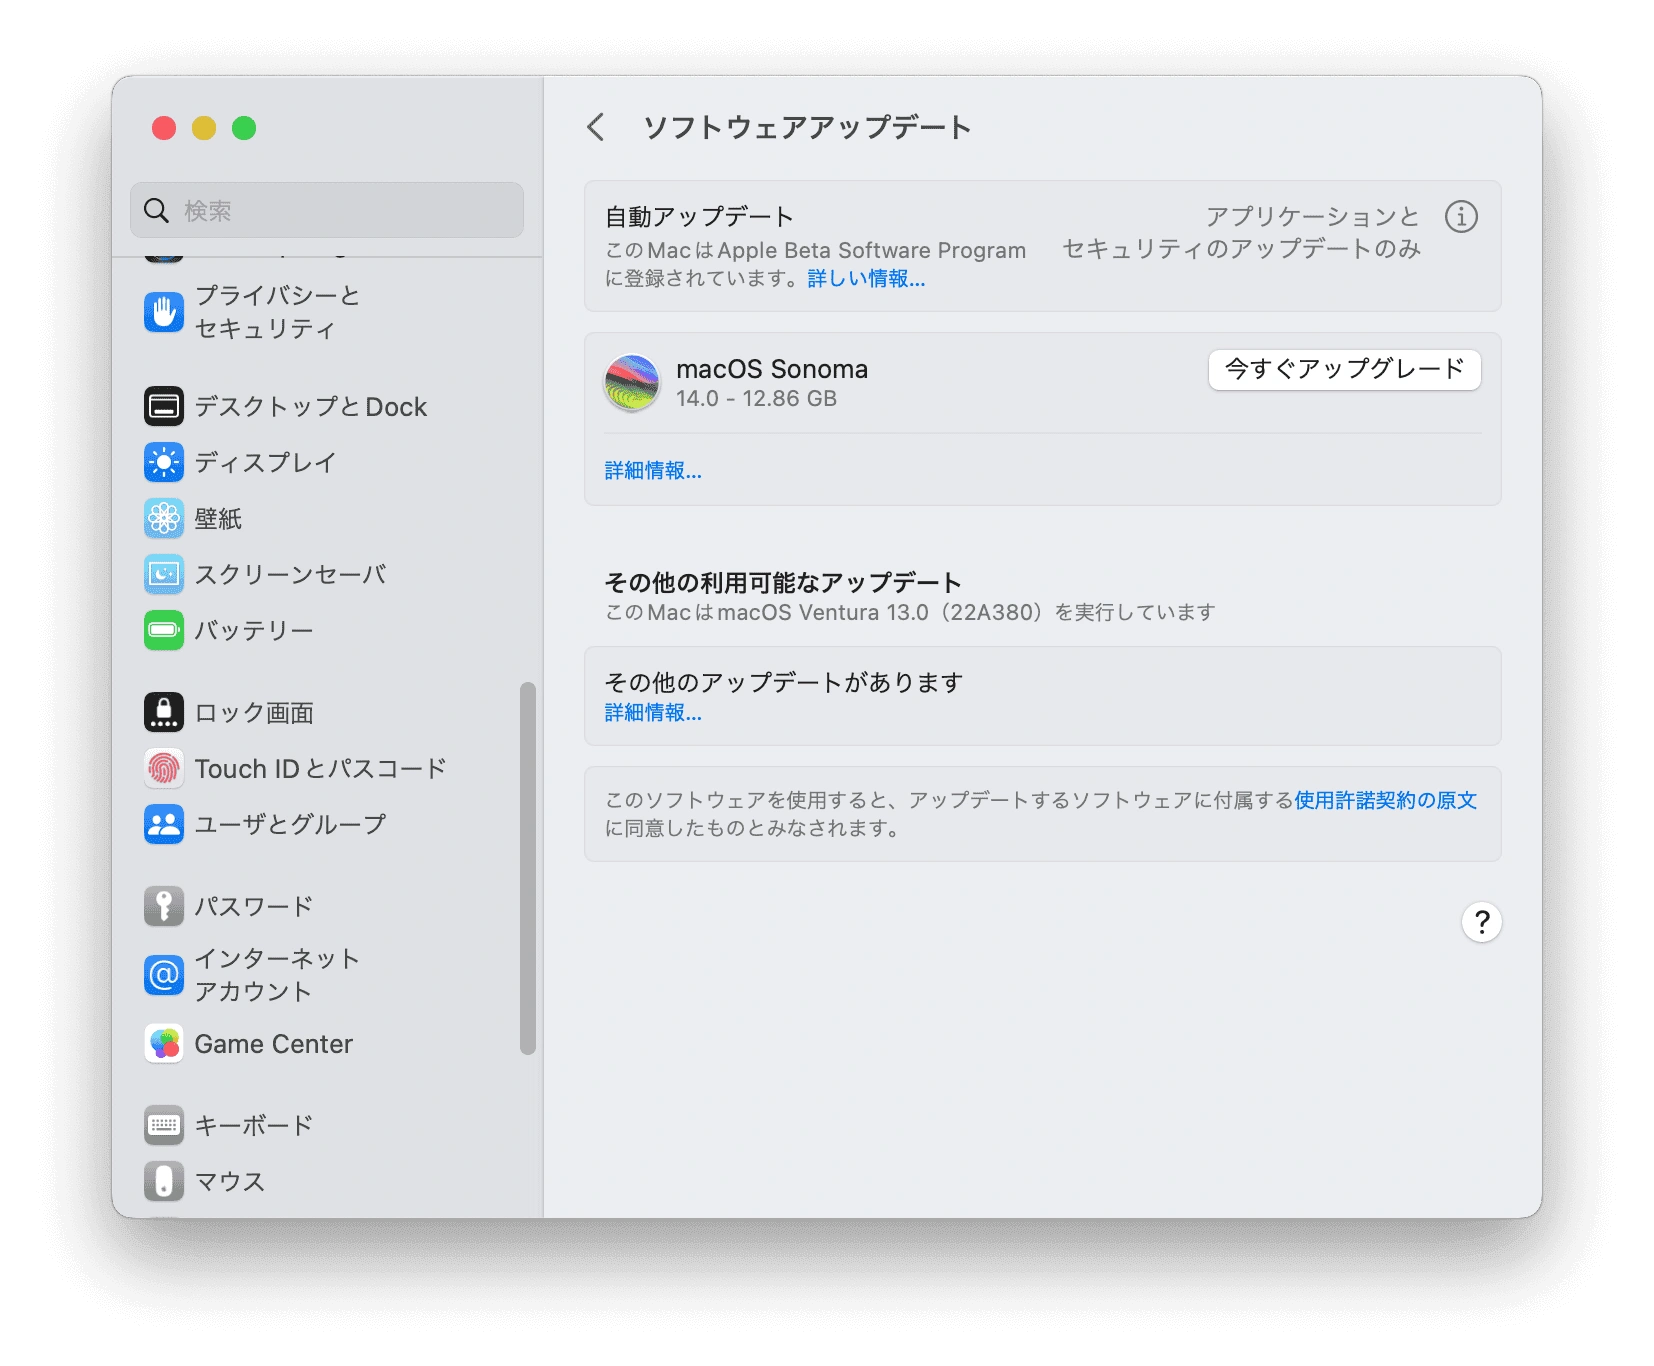 sofware-update-macos-sonomoa-jp.png